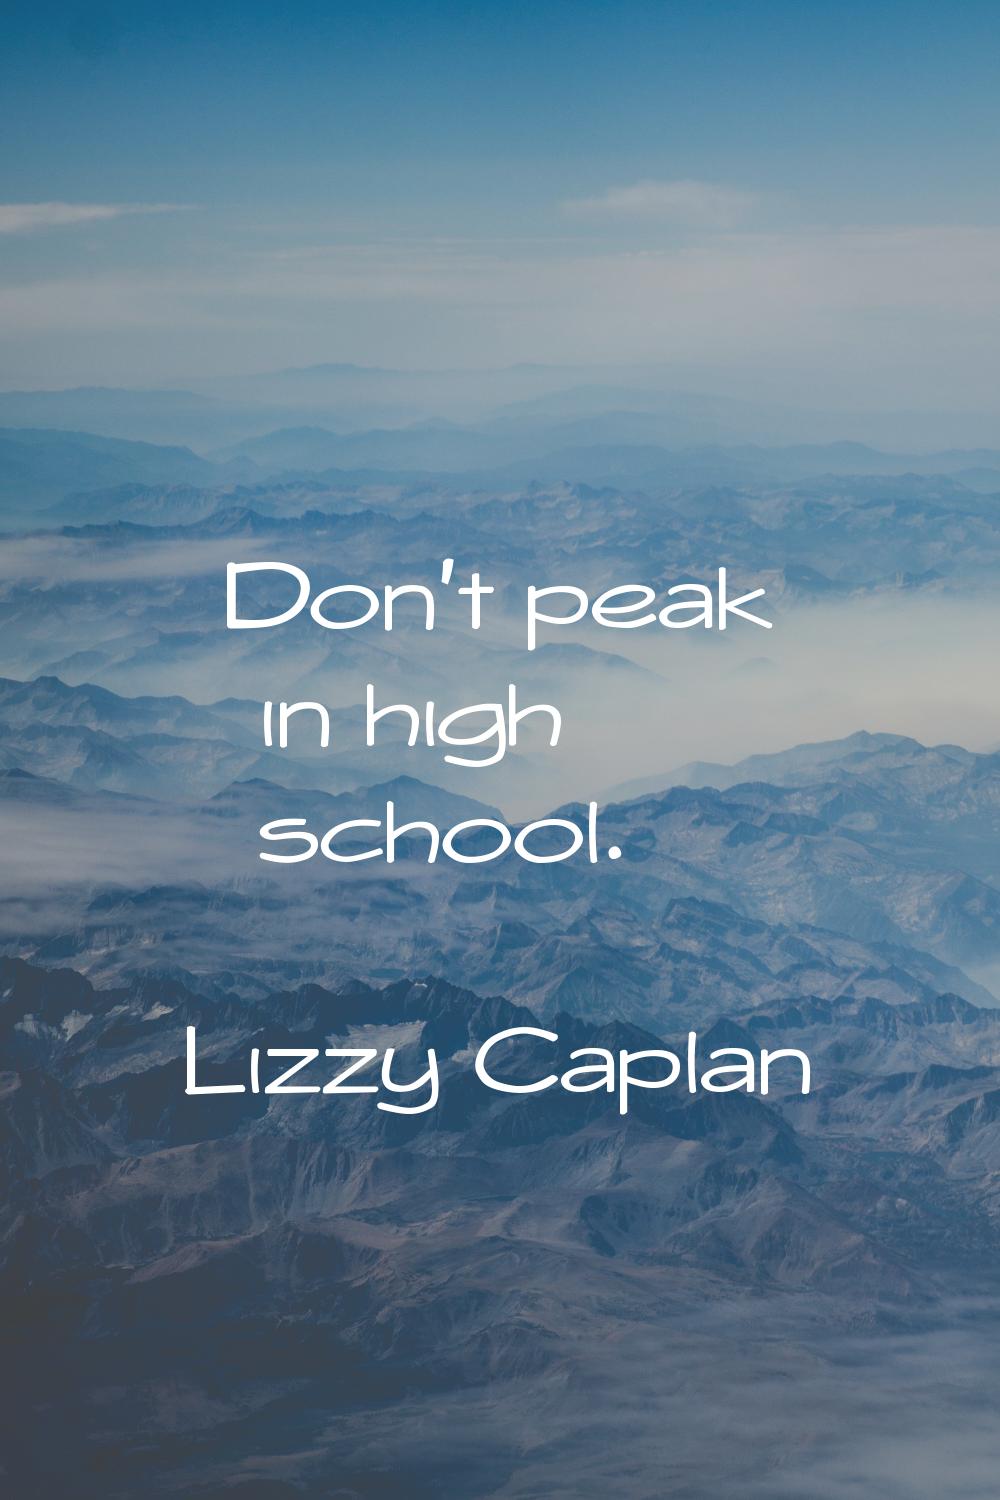 Don't peak in high school.